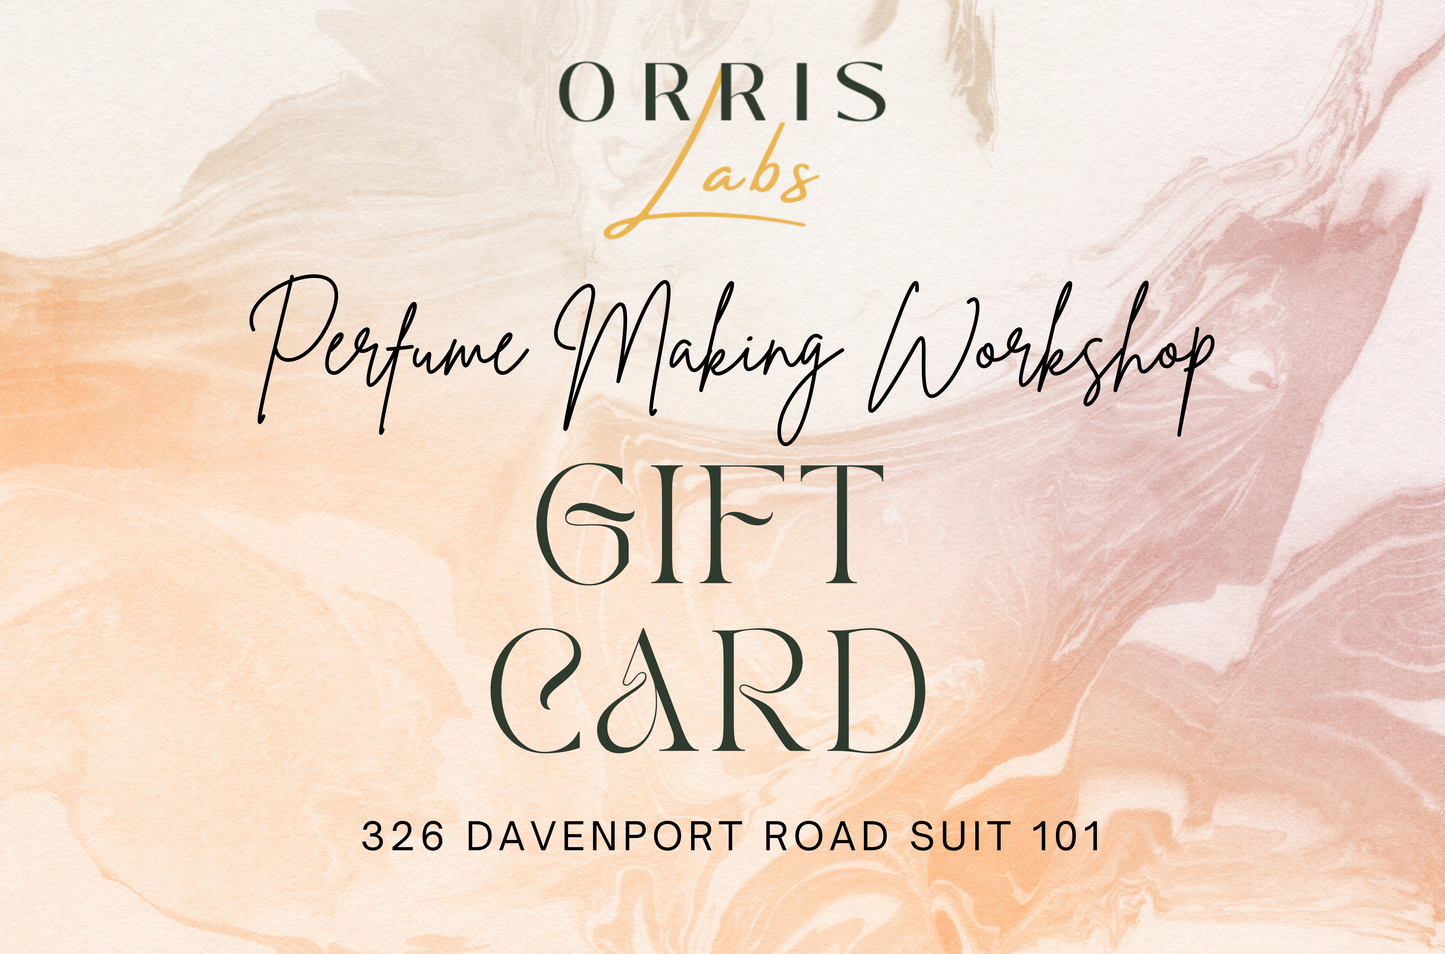 Orris Labs Toronto Perfume | Cologne Making Workshop Virtual Gift Card